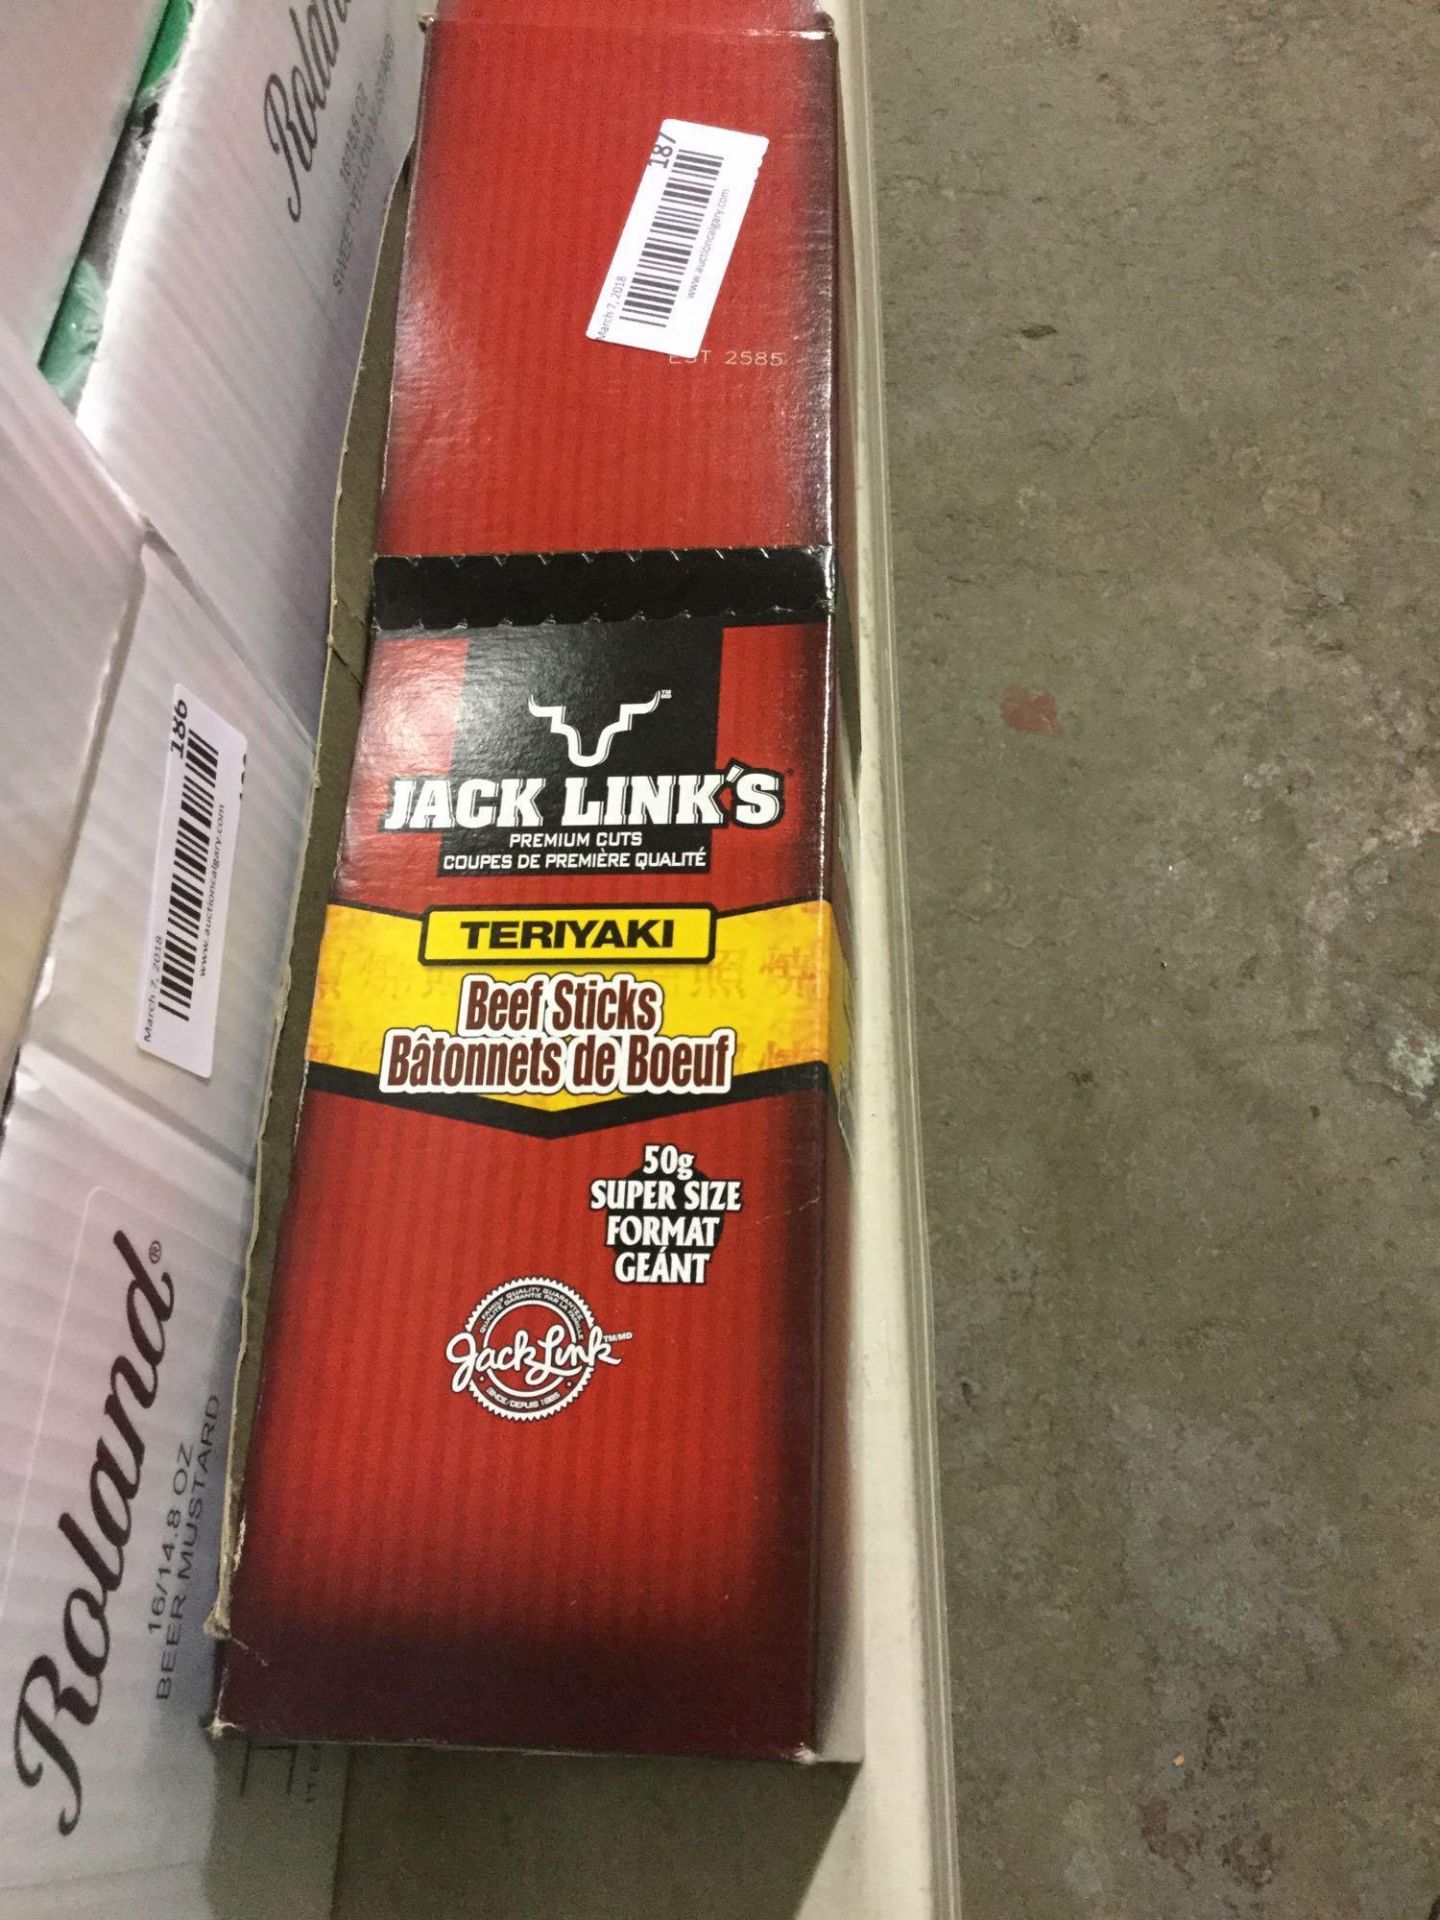 Box of 24 x 50 g Jack Link's Teriyaki Beef Sticks